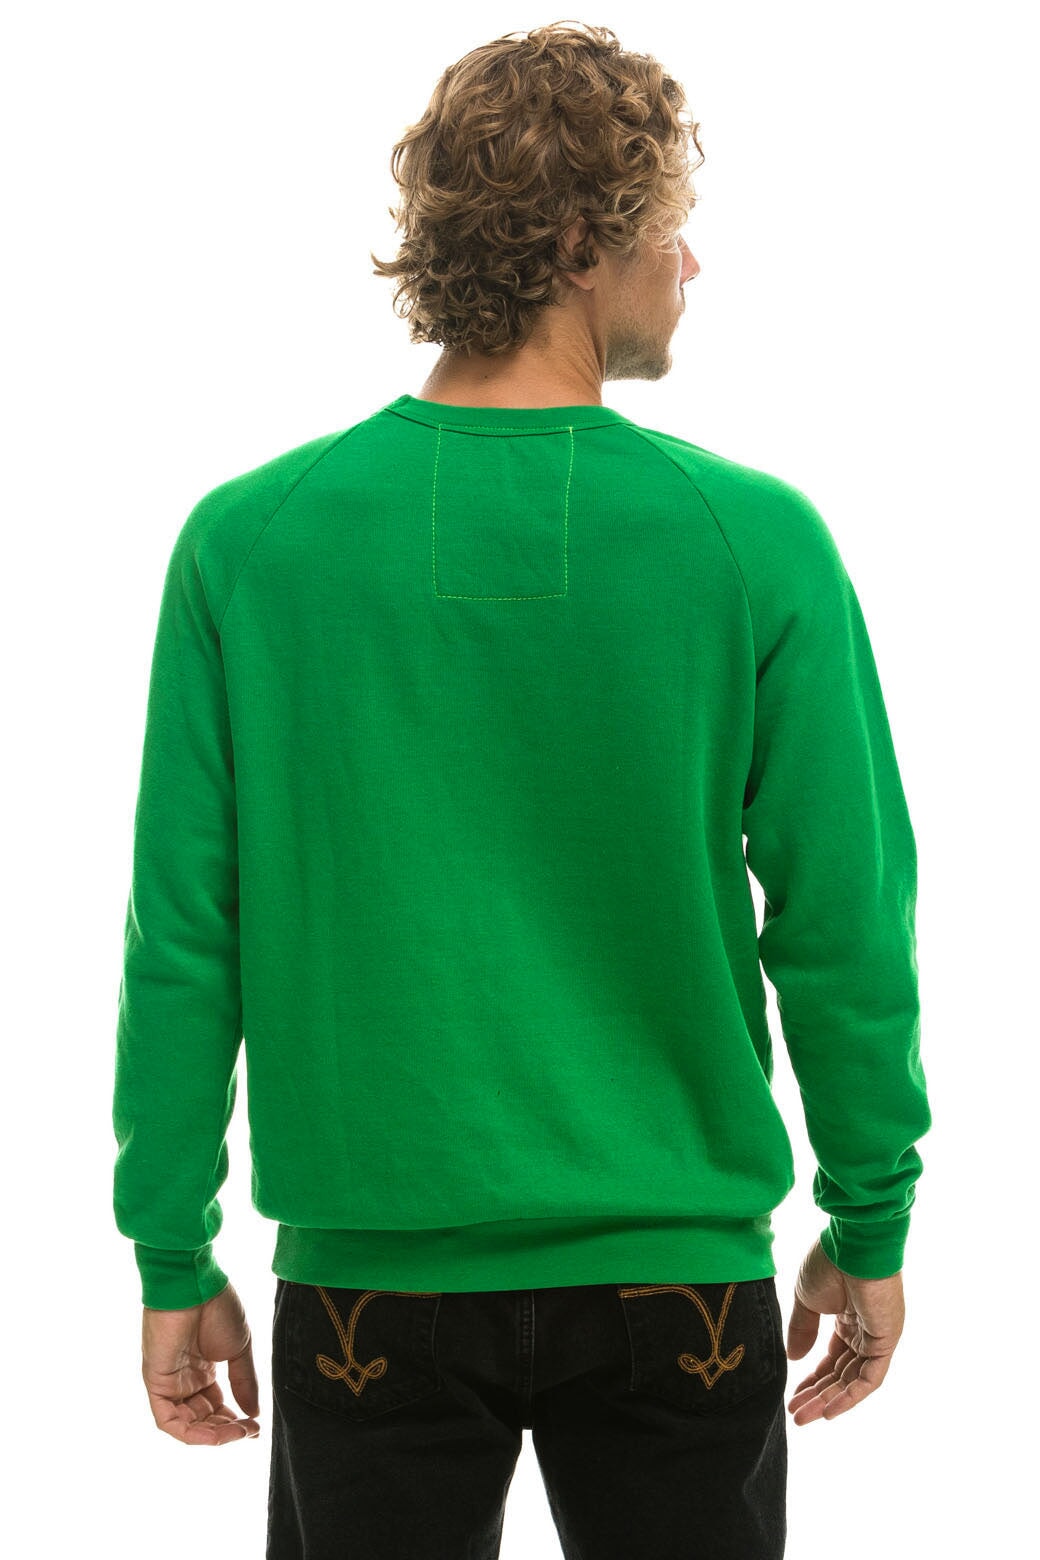 RIDE LOGO WHITE CREW SWEATSHIRT - KELLY GREEN Sweatshirt Aviator Nation 